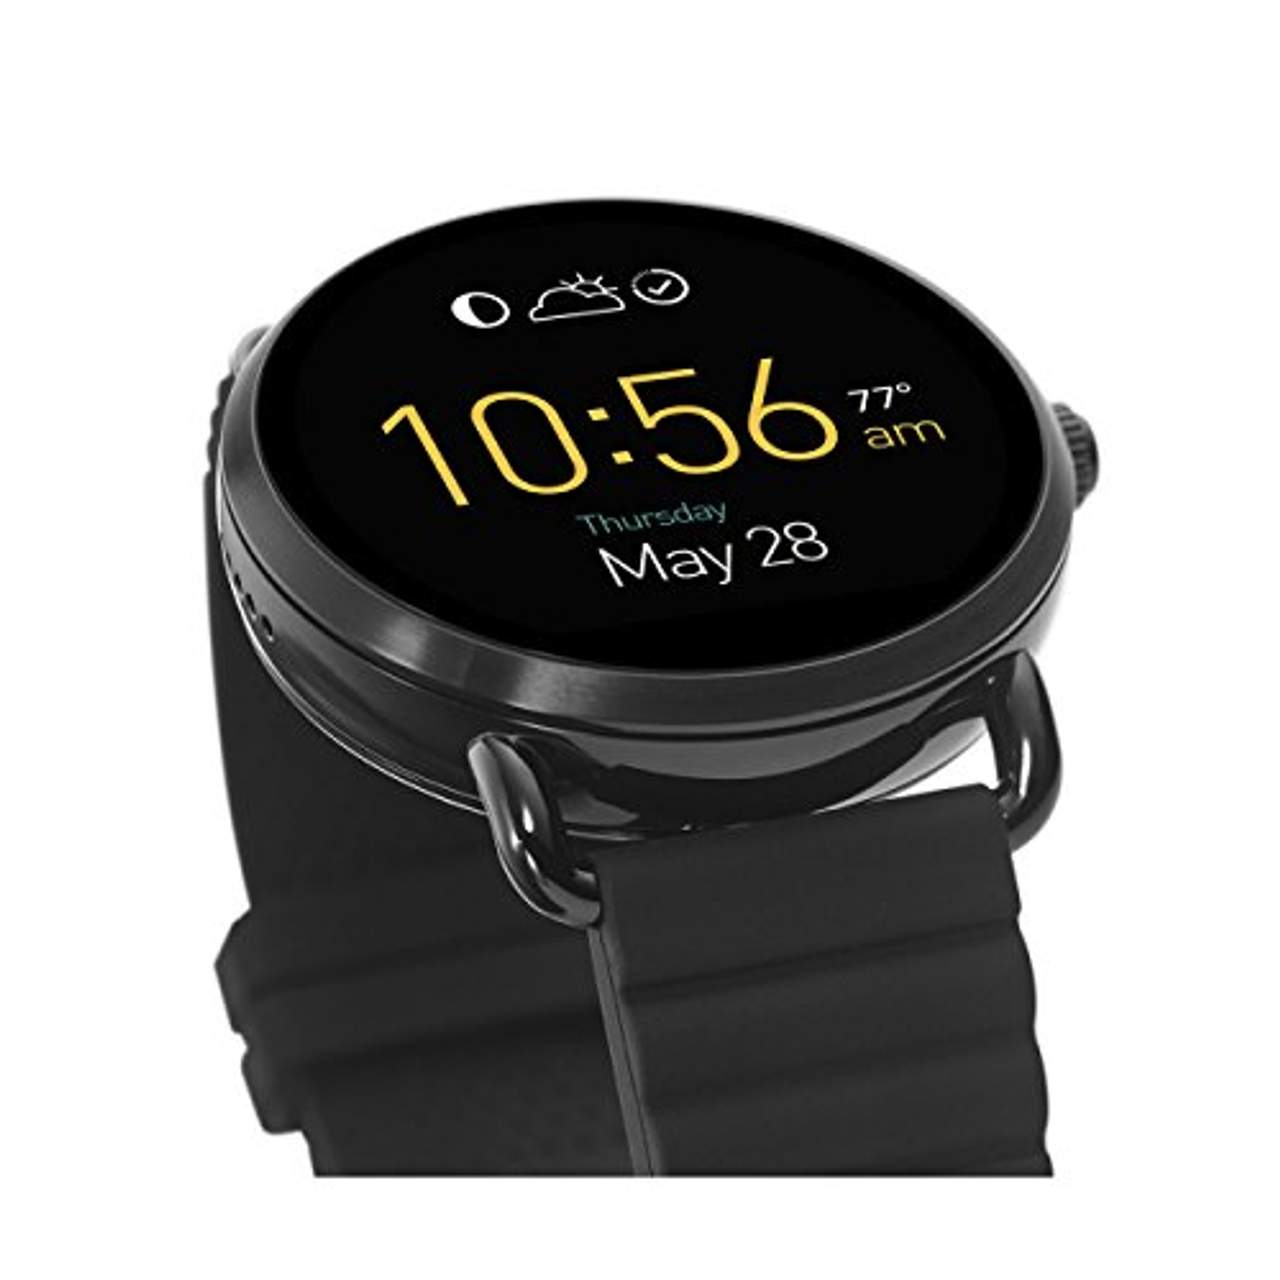 Fossil Q Unisex Smartwatch FTW2103